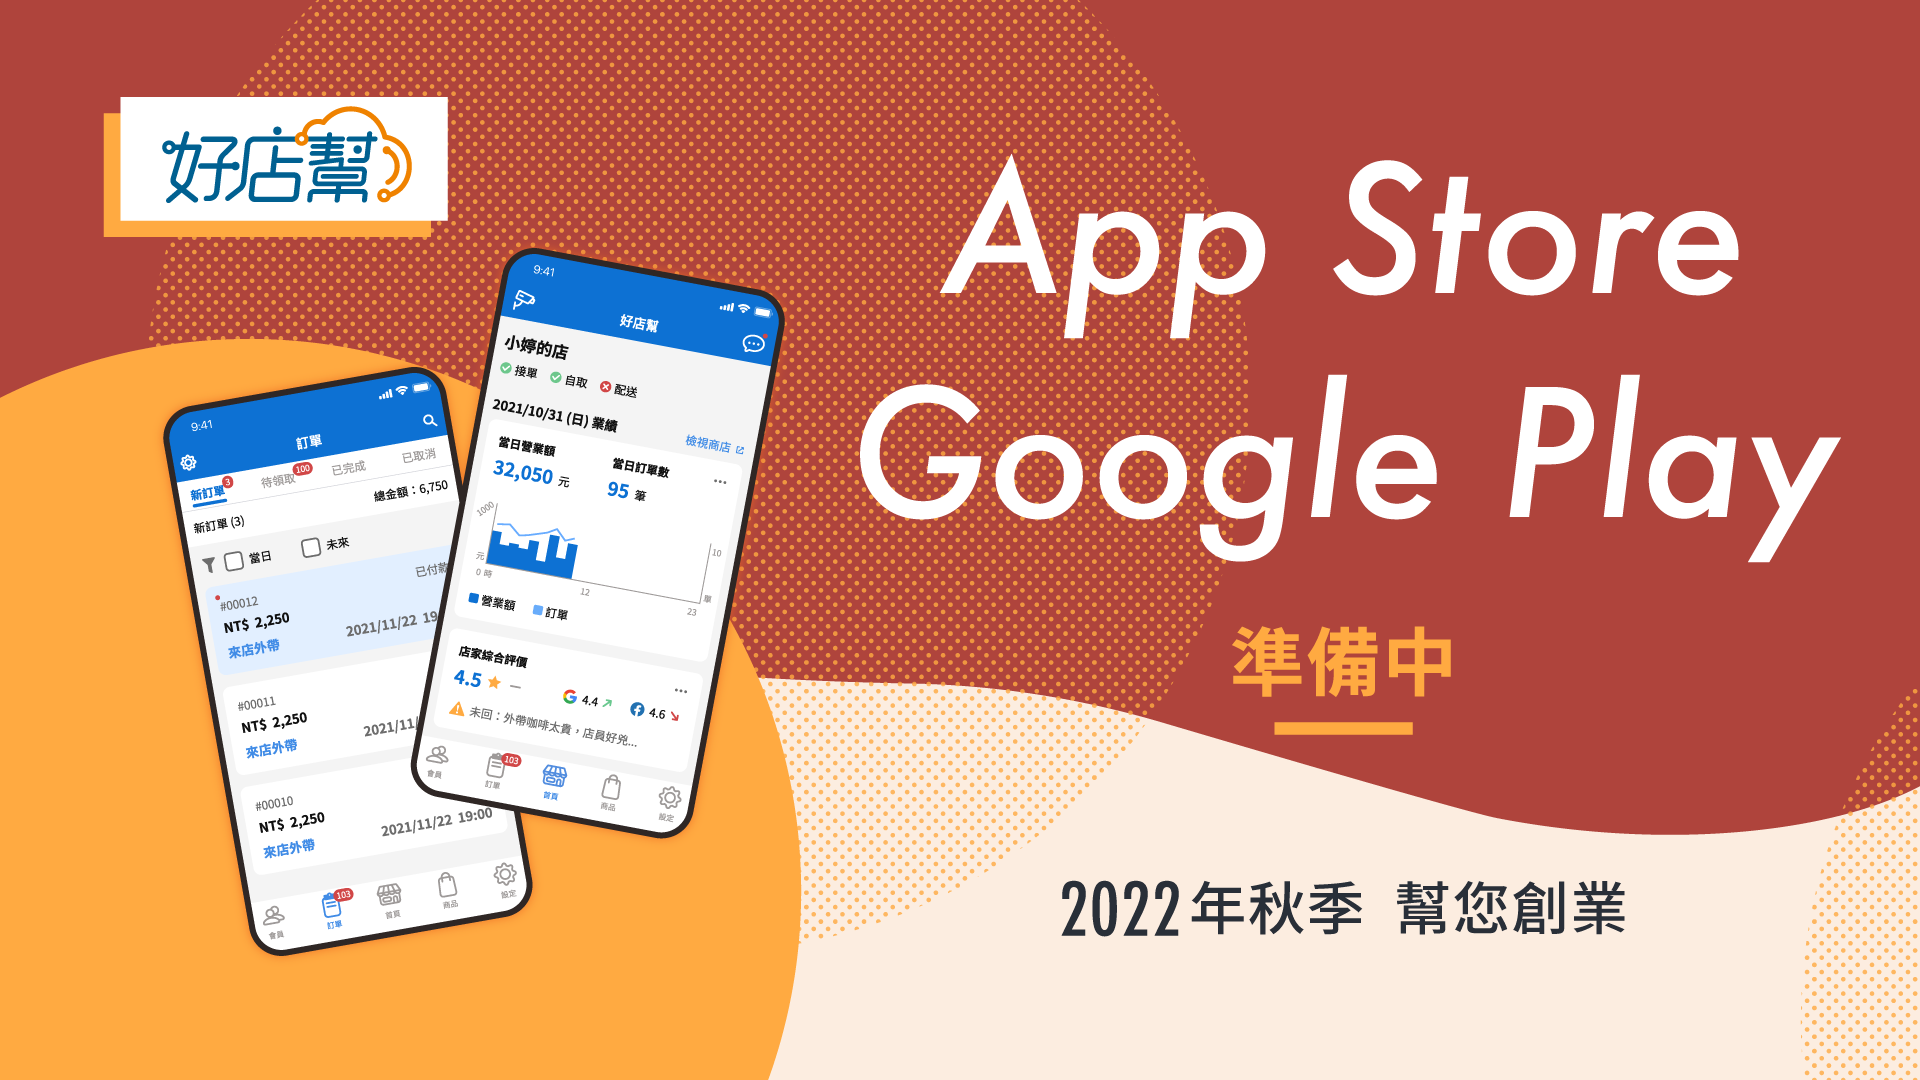 App Store Google Play 準備中